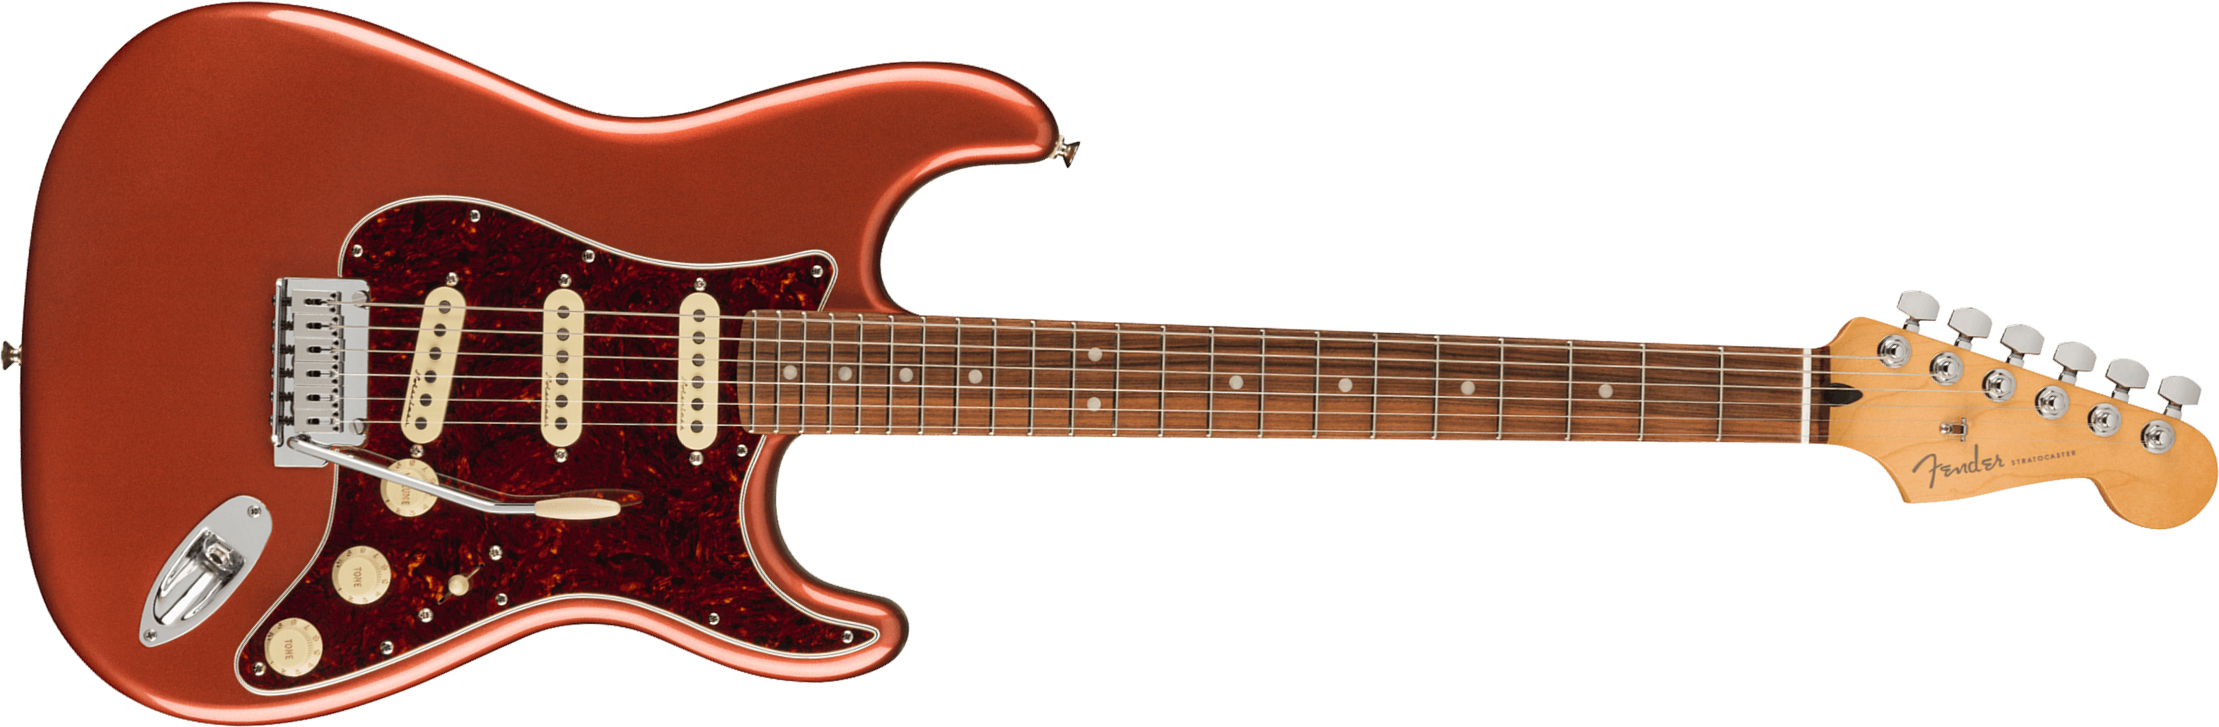 Fender Strat Player Plus Mex 3s Trem Pf - Aged Candy Apple Red - Guitarra eléctrica con forma de str. - Main picture